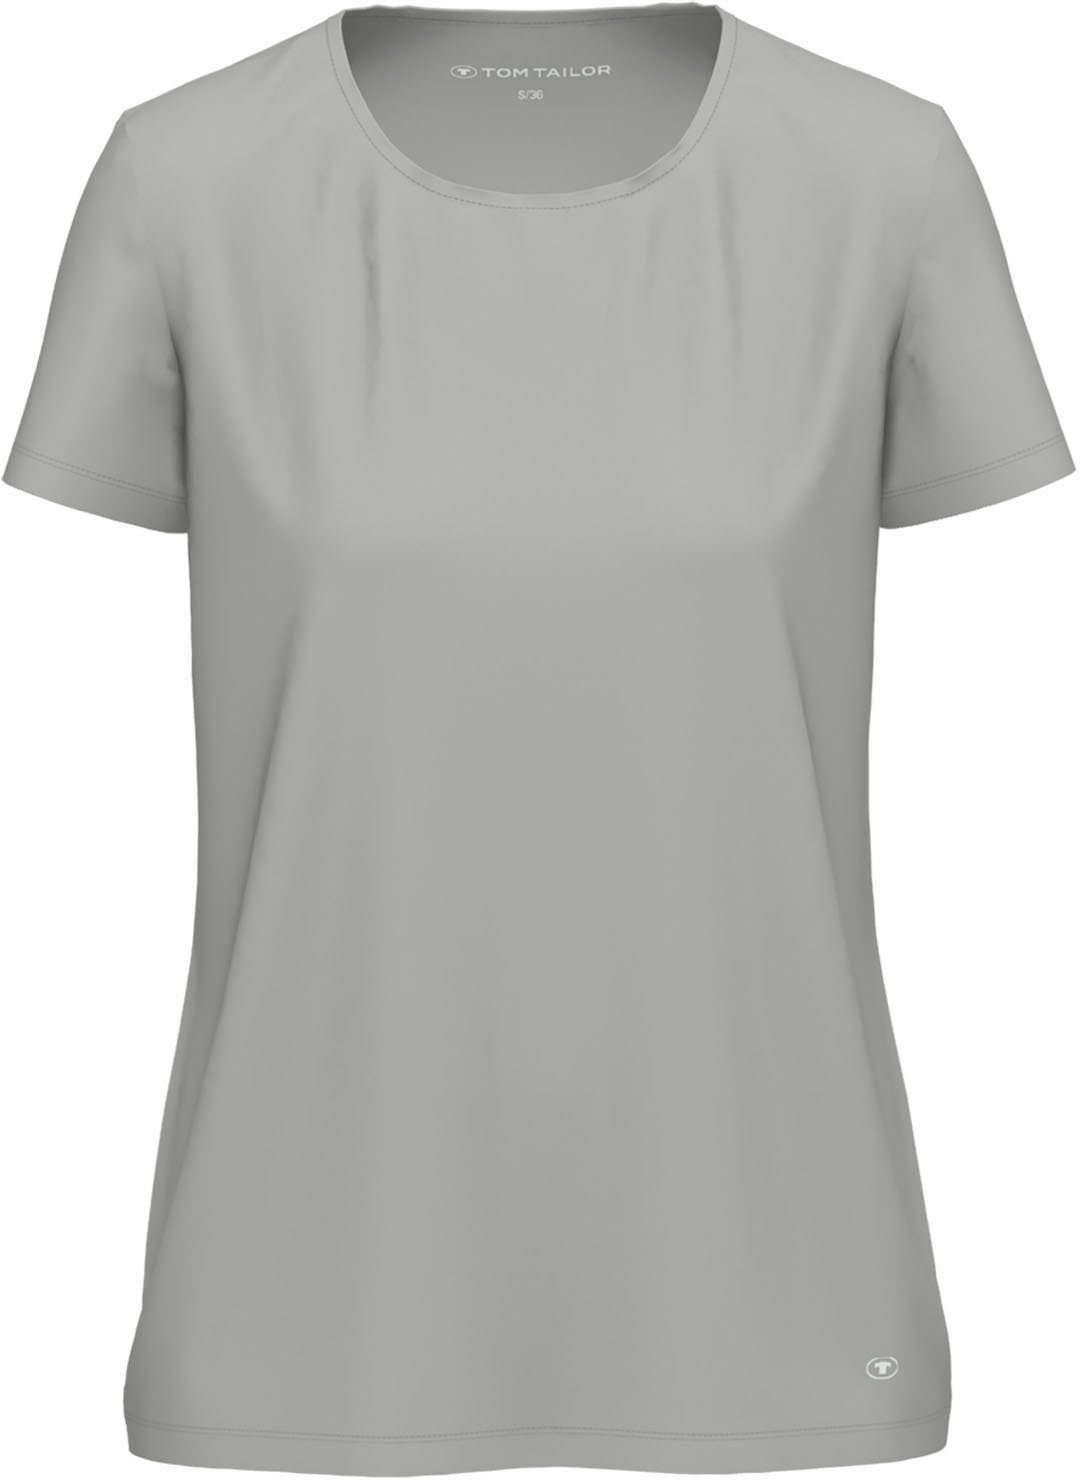 TOM TAILOR T-Shirt grau-mittel-uni | T-Shirts